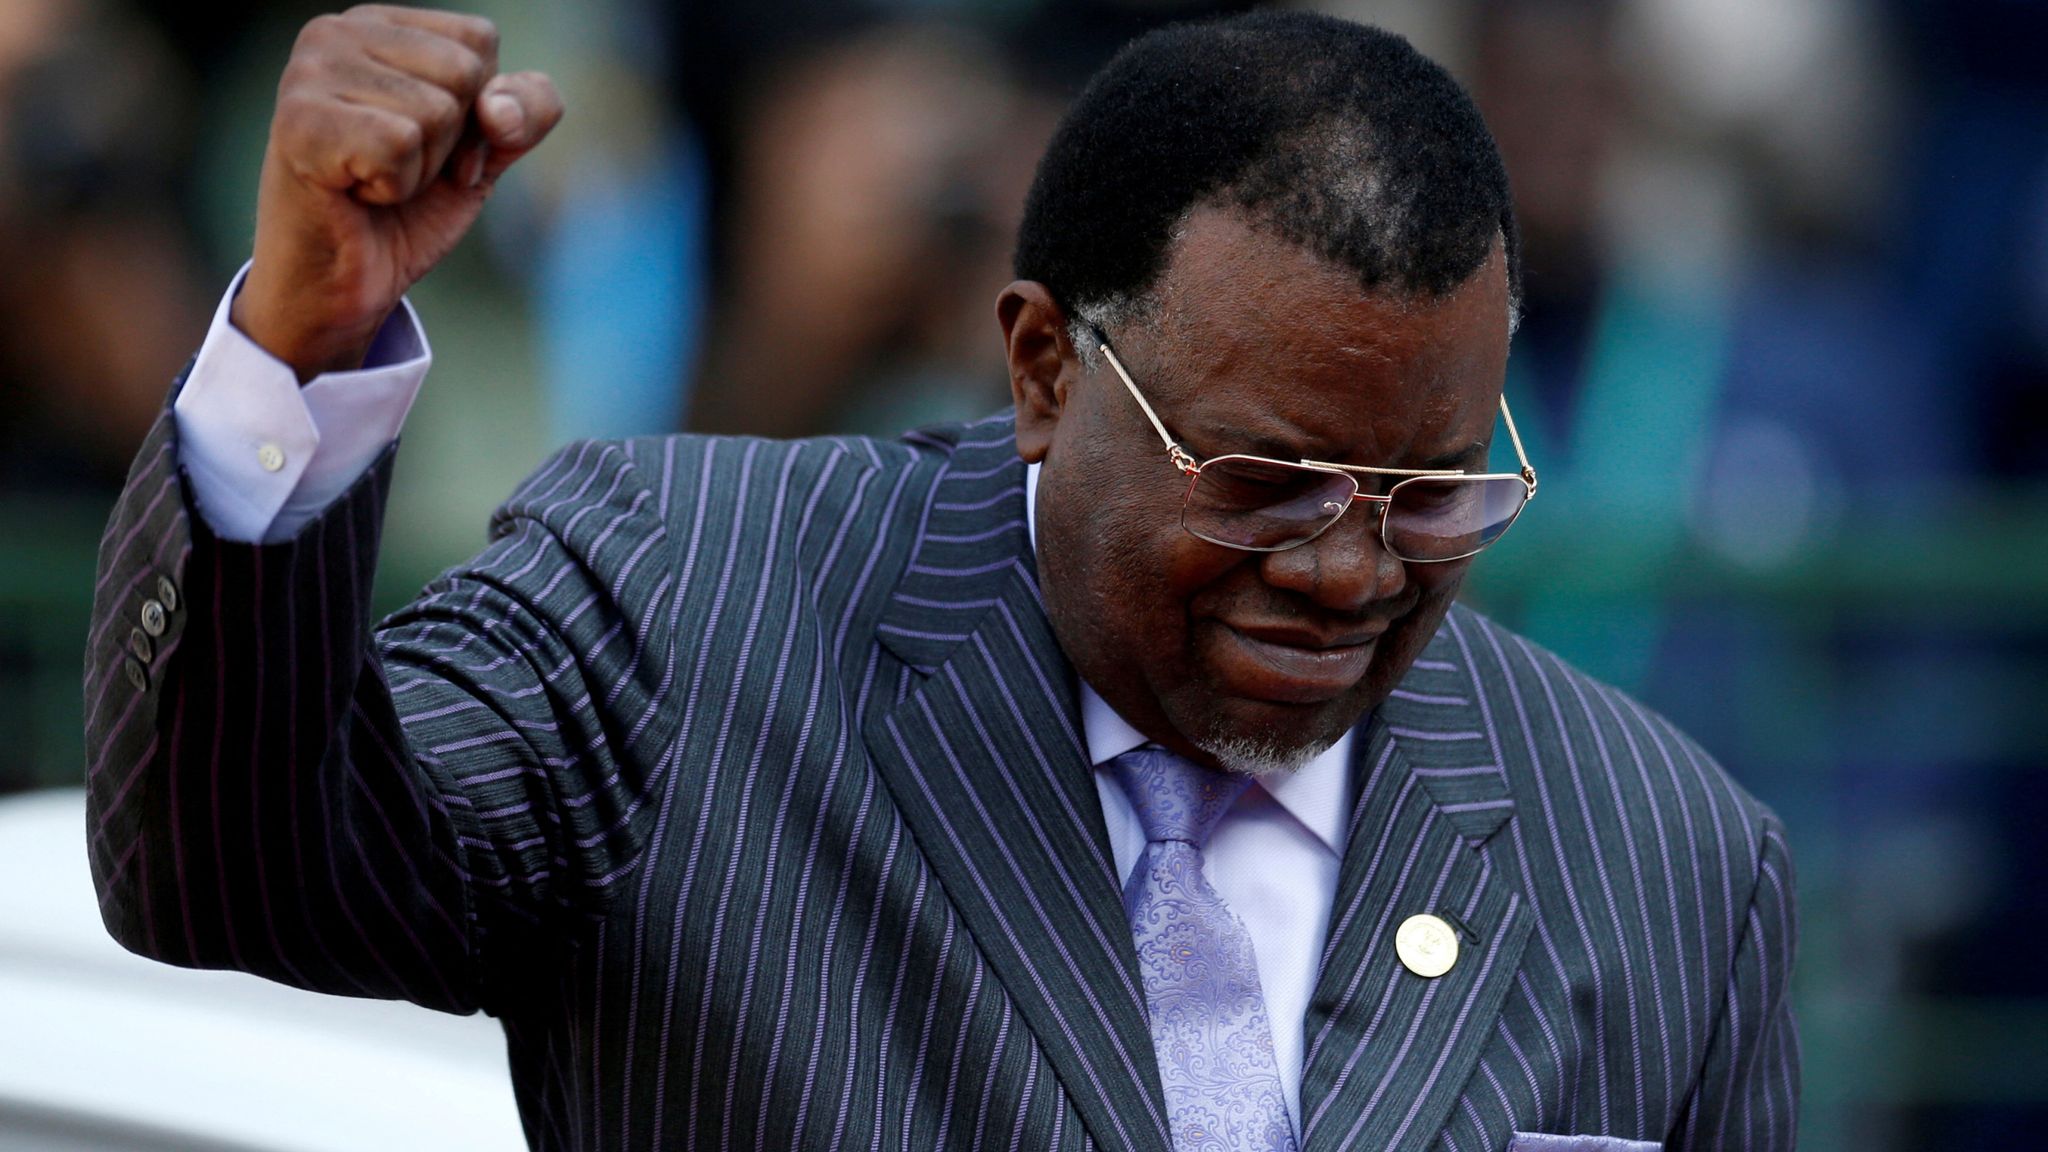 Namibia’s President Hage Geingob Dies at 82: Recalling His Legacy